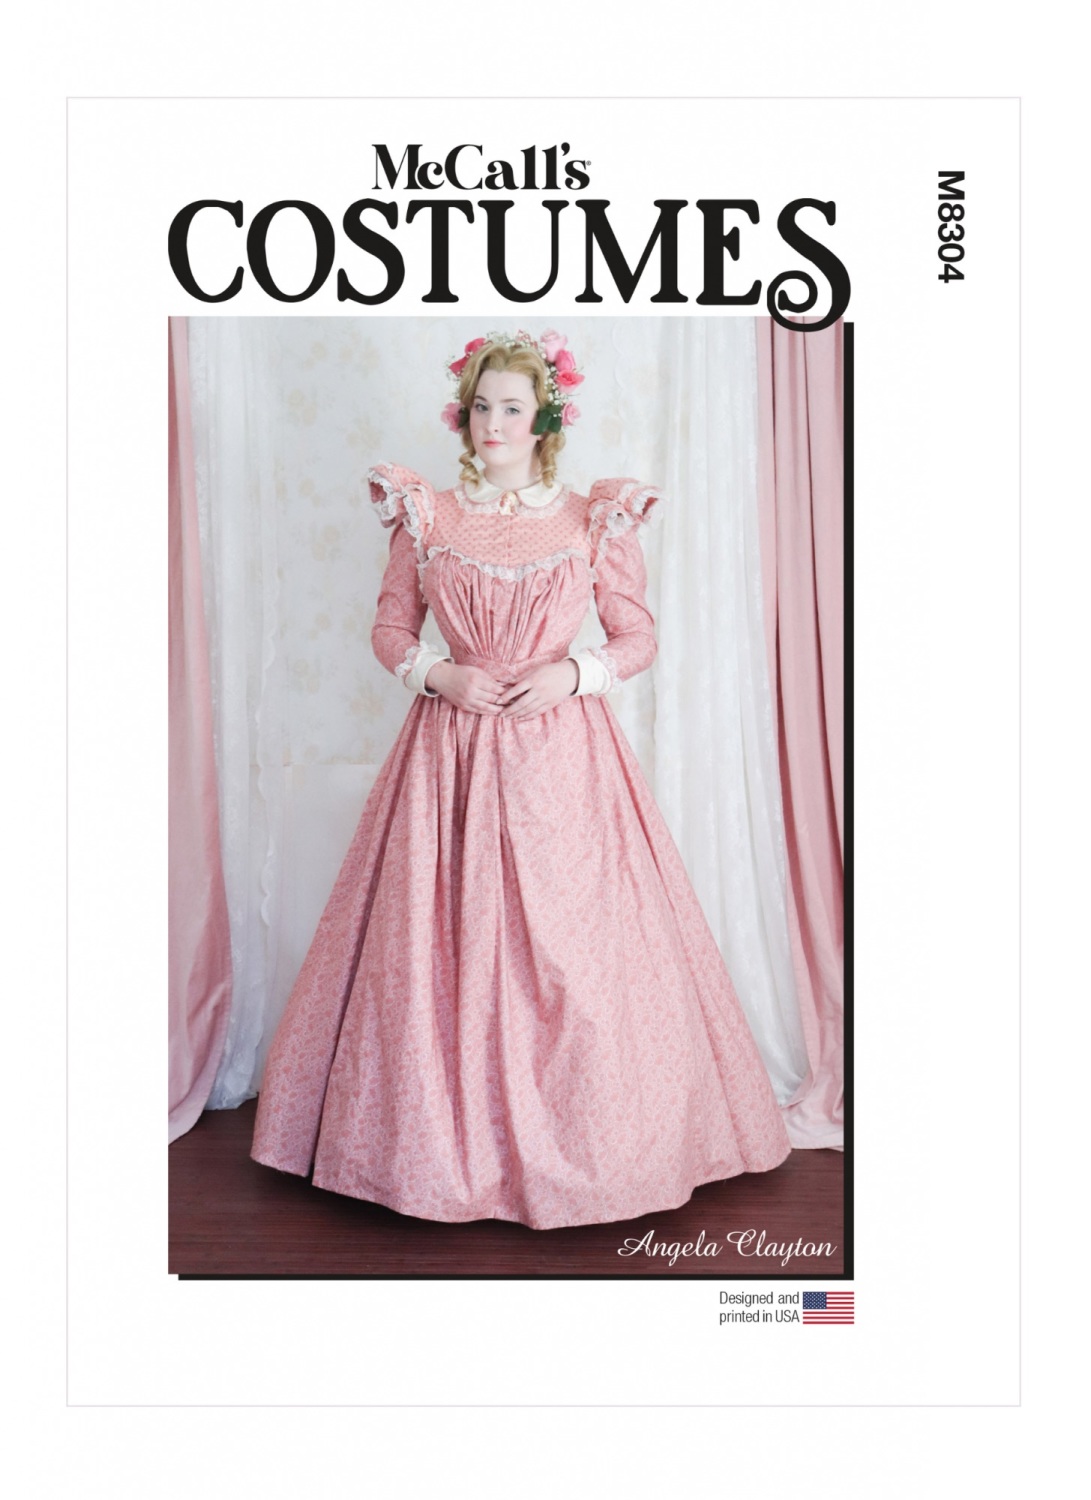 McCall's Costume Pattern - M8304 - 1890s Tea Dress and Belt by Angela Clayton - Size E5 (14-16-18-20-22)